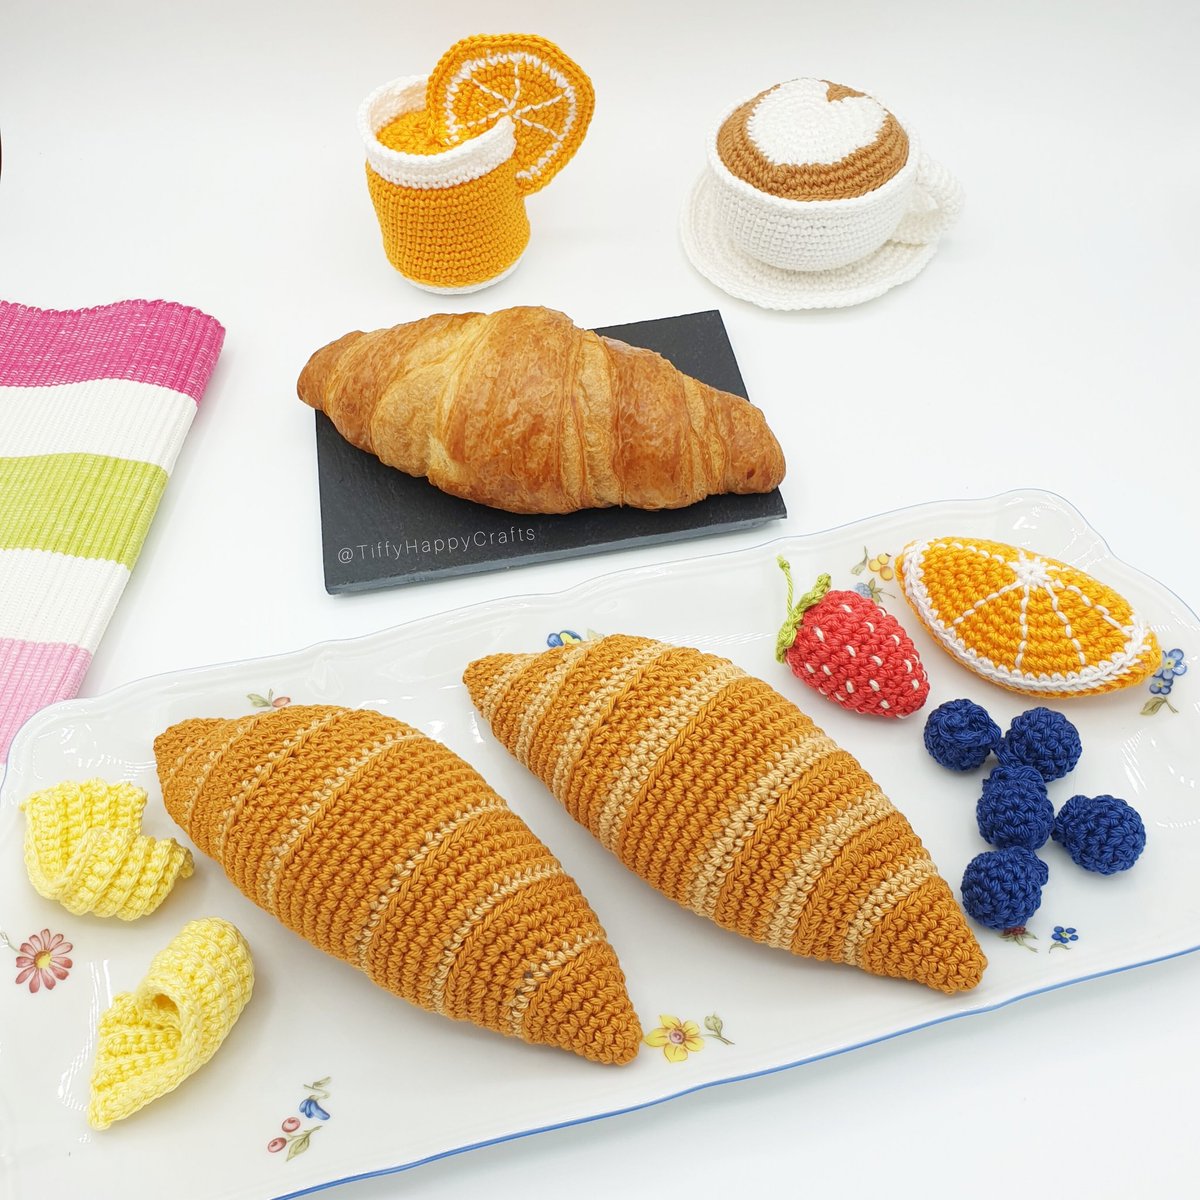 Guten Morgen ❤😊  #croissants #cappuccino #Orangejuice #Breakfast #Frühstück #crochetpattern #Häkeln #Etsy #Etsysale #EtsyDE